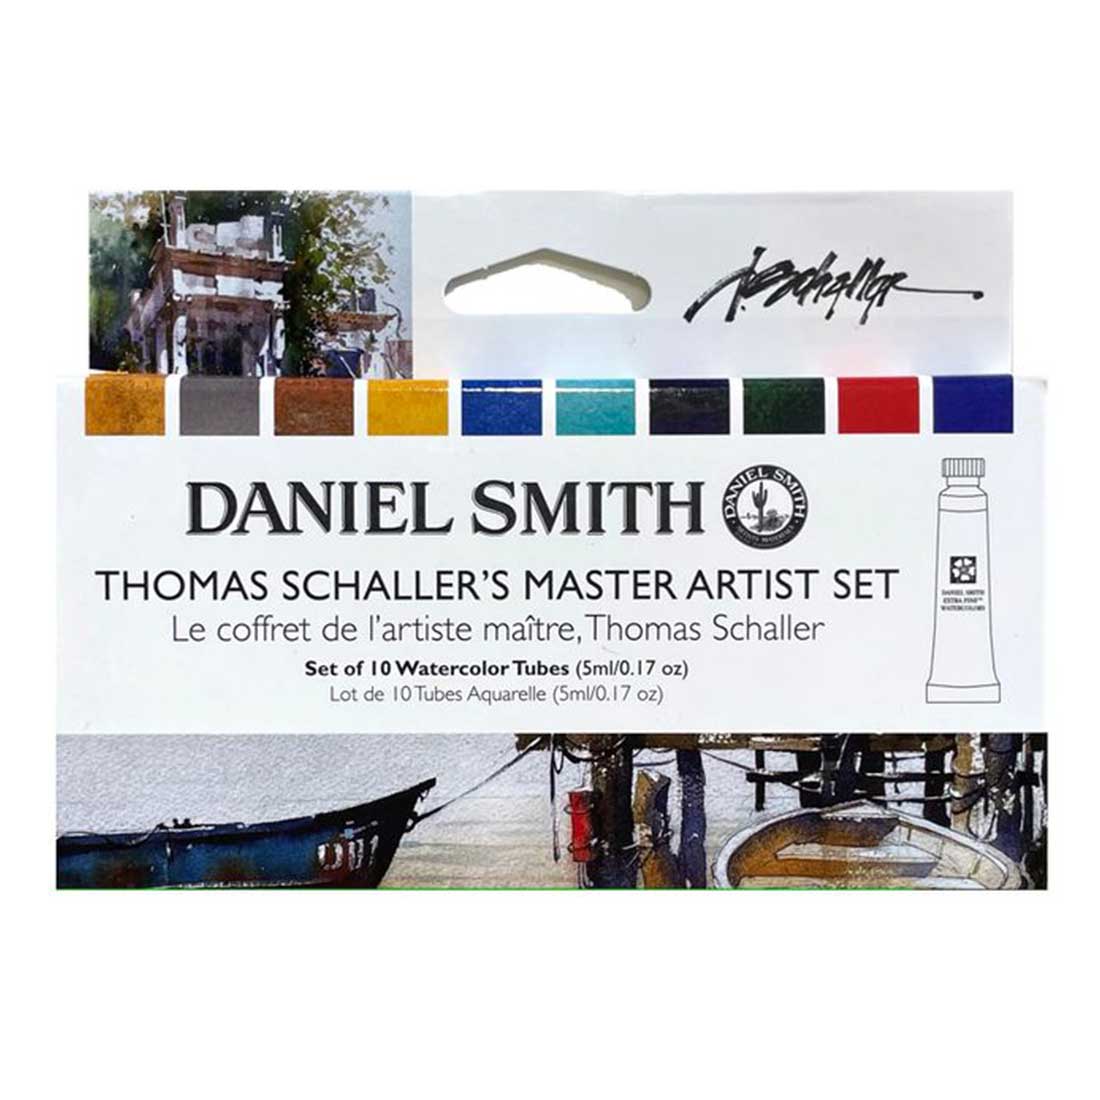 Daniel Smith Extra fine Watercolors 5 ml Tubes - Thomas Schaller`s Master Artist Set - 10 Tubes